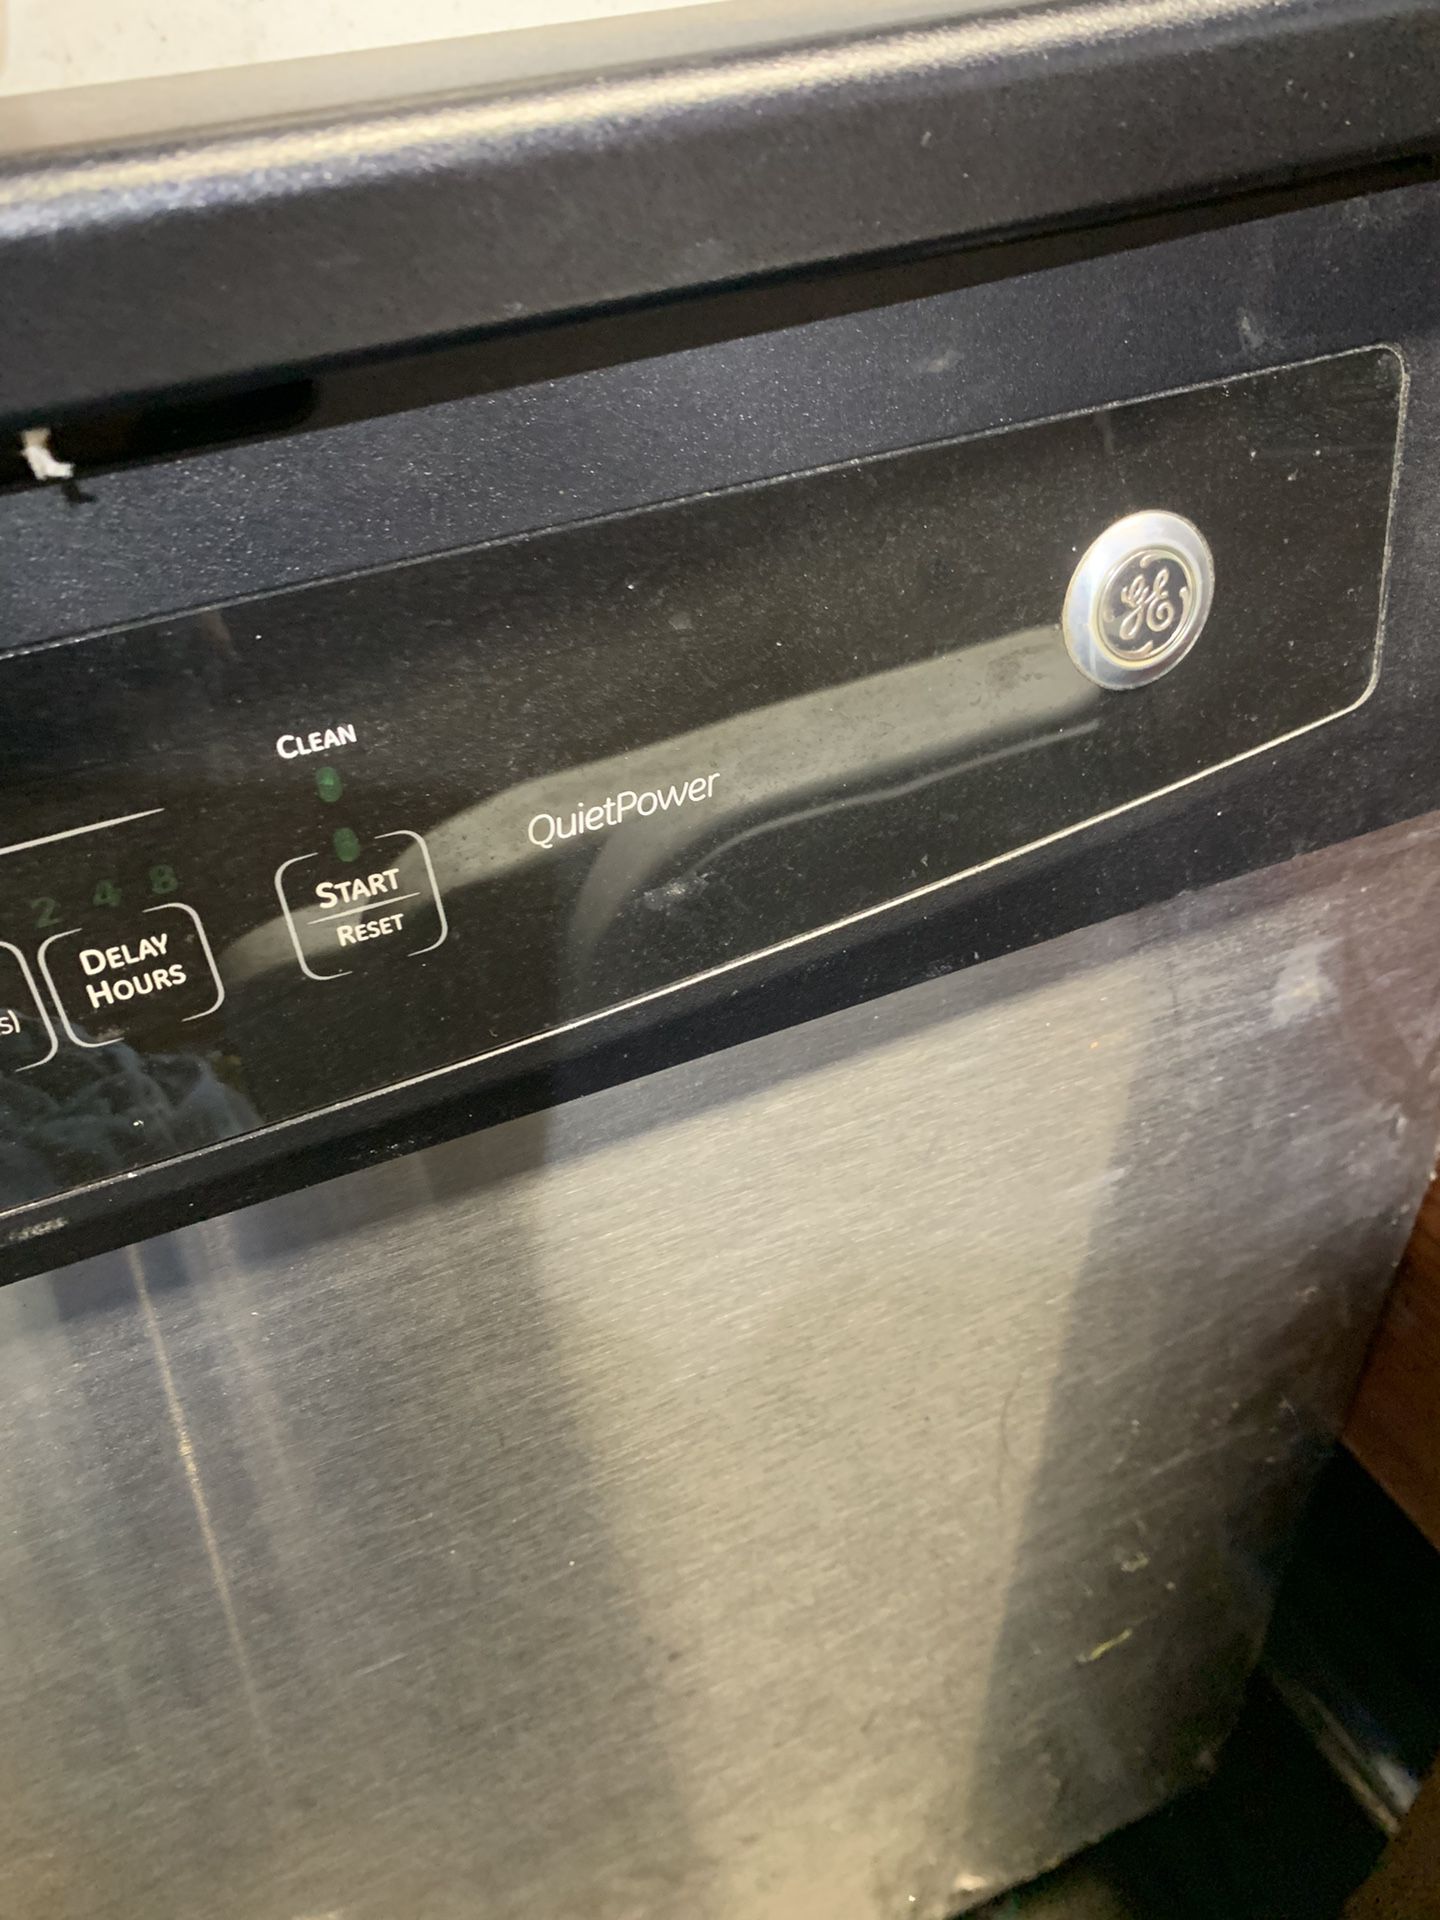 Genital Electric Dishwasher